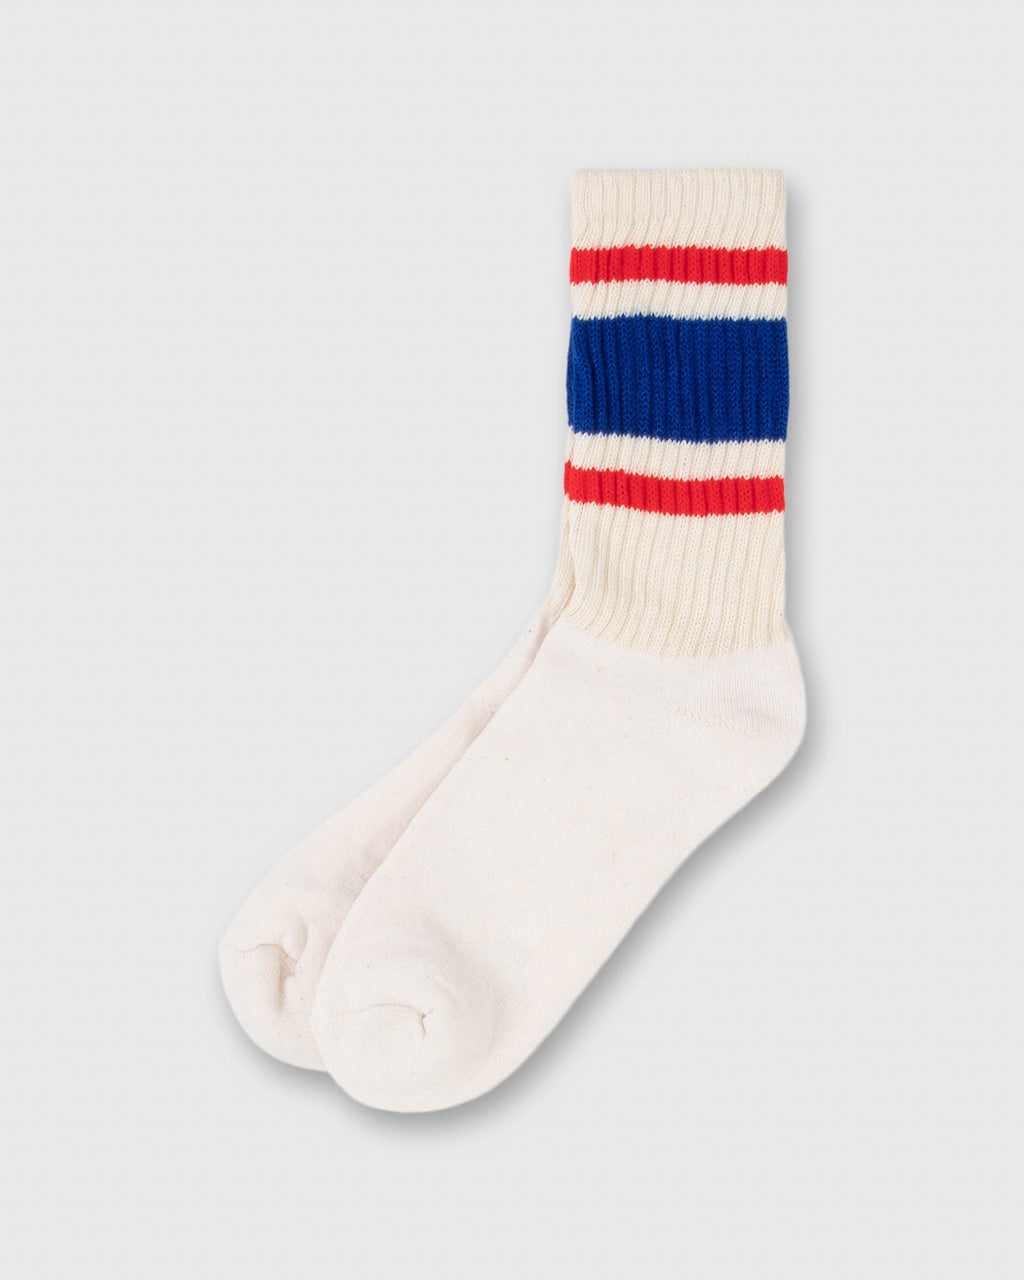 Can We Talk Socks? | Shop Sid Mashburn